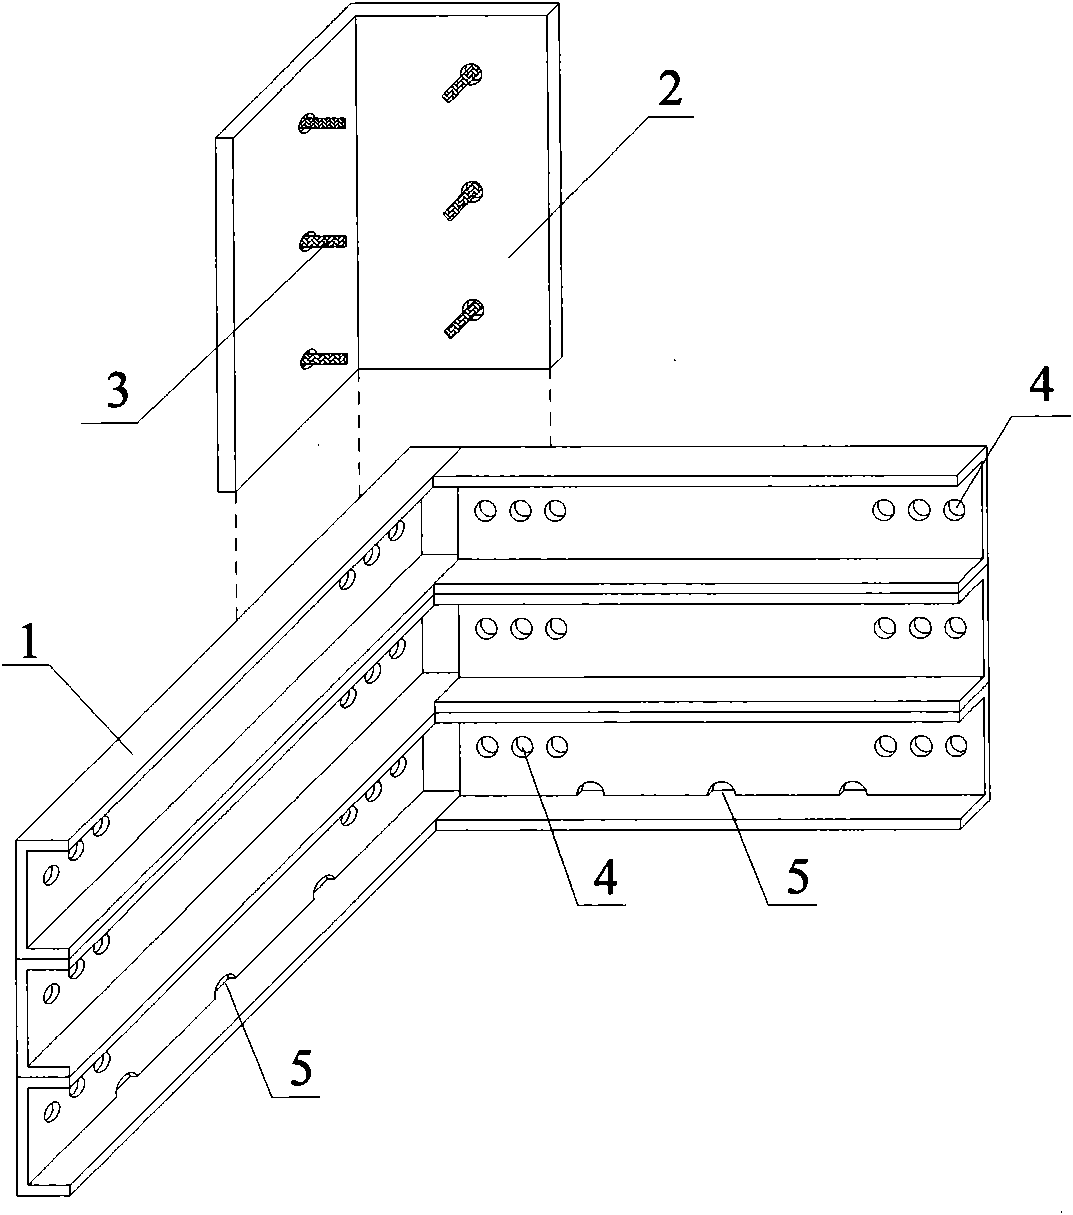 Hollow floorslab template for building